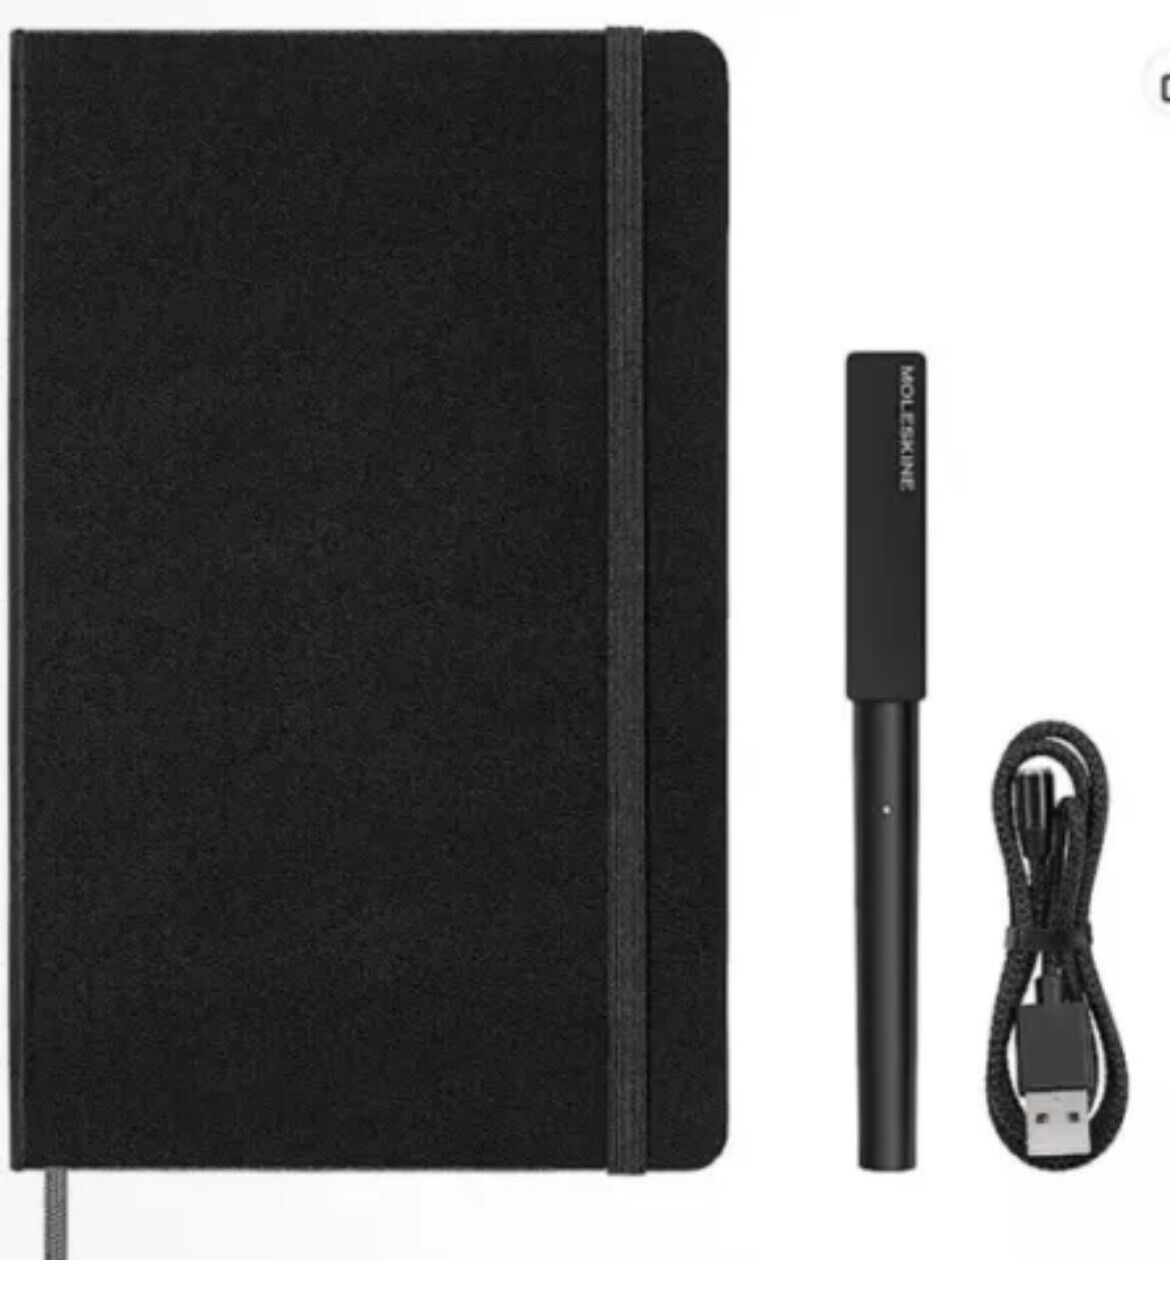 Moleskine Smart Writing Set Smart Notebook & New Smart Pen